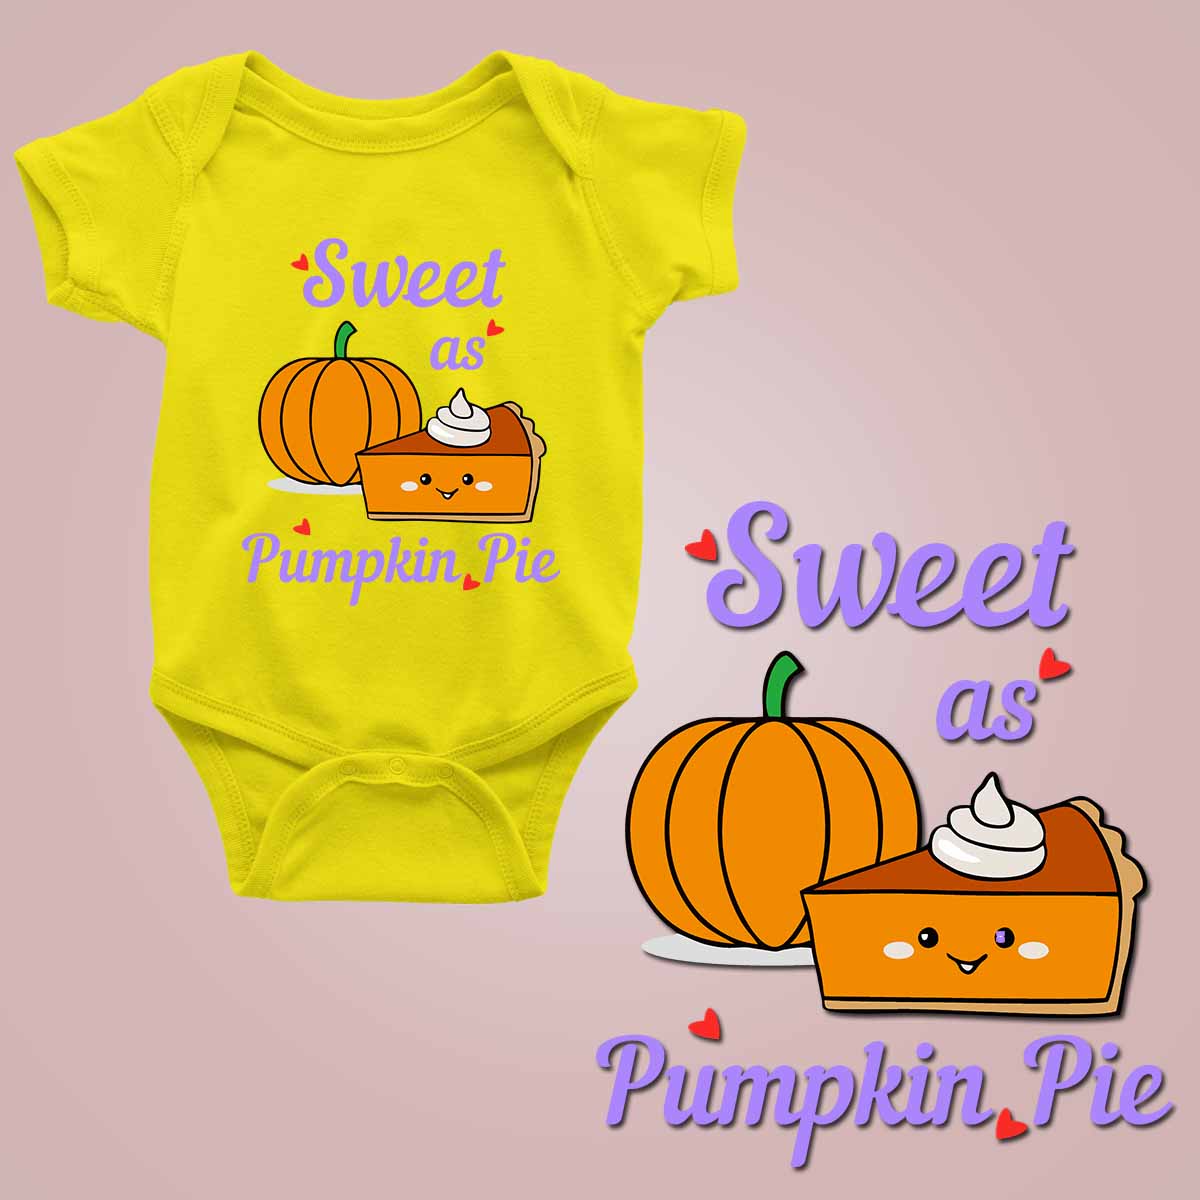 Sweet as pumpkin pie yellow